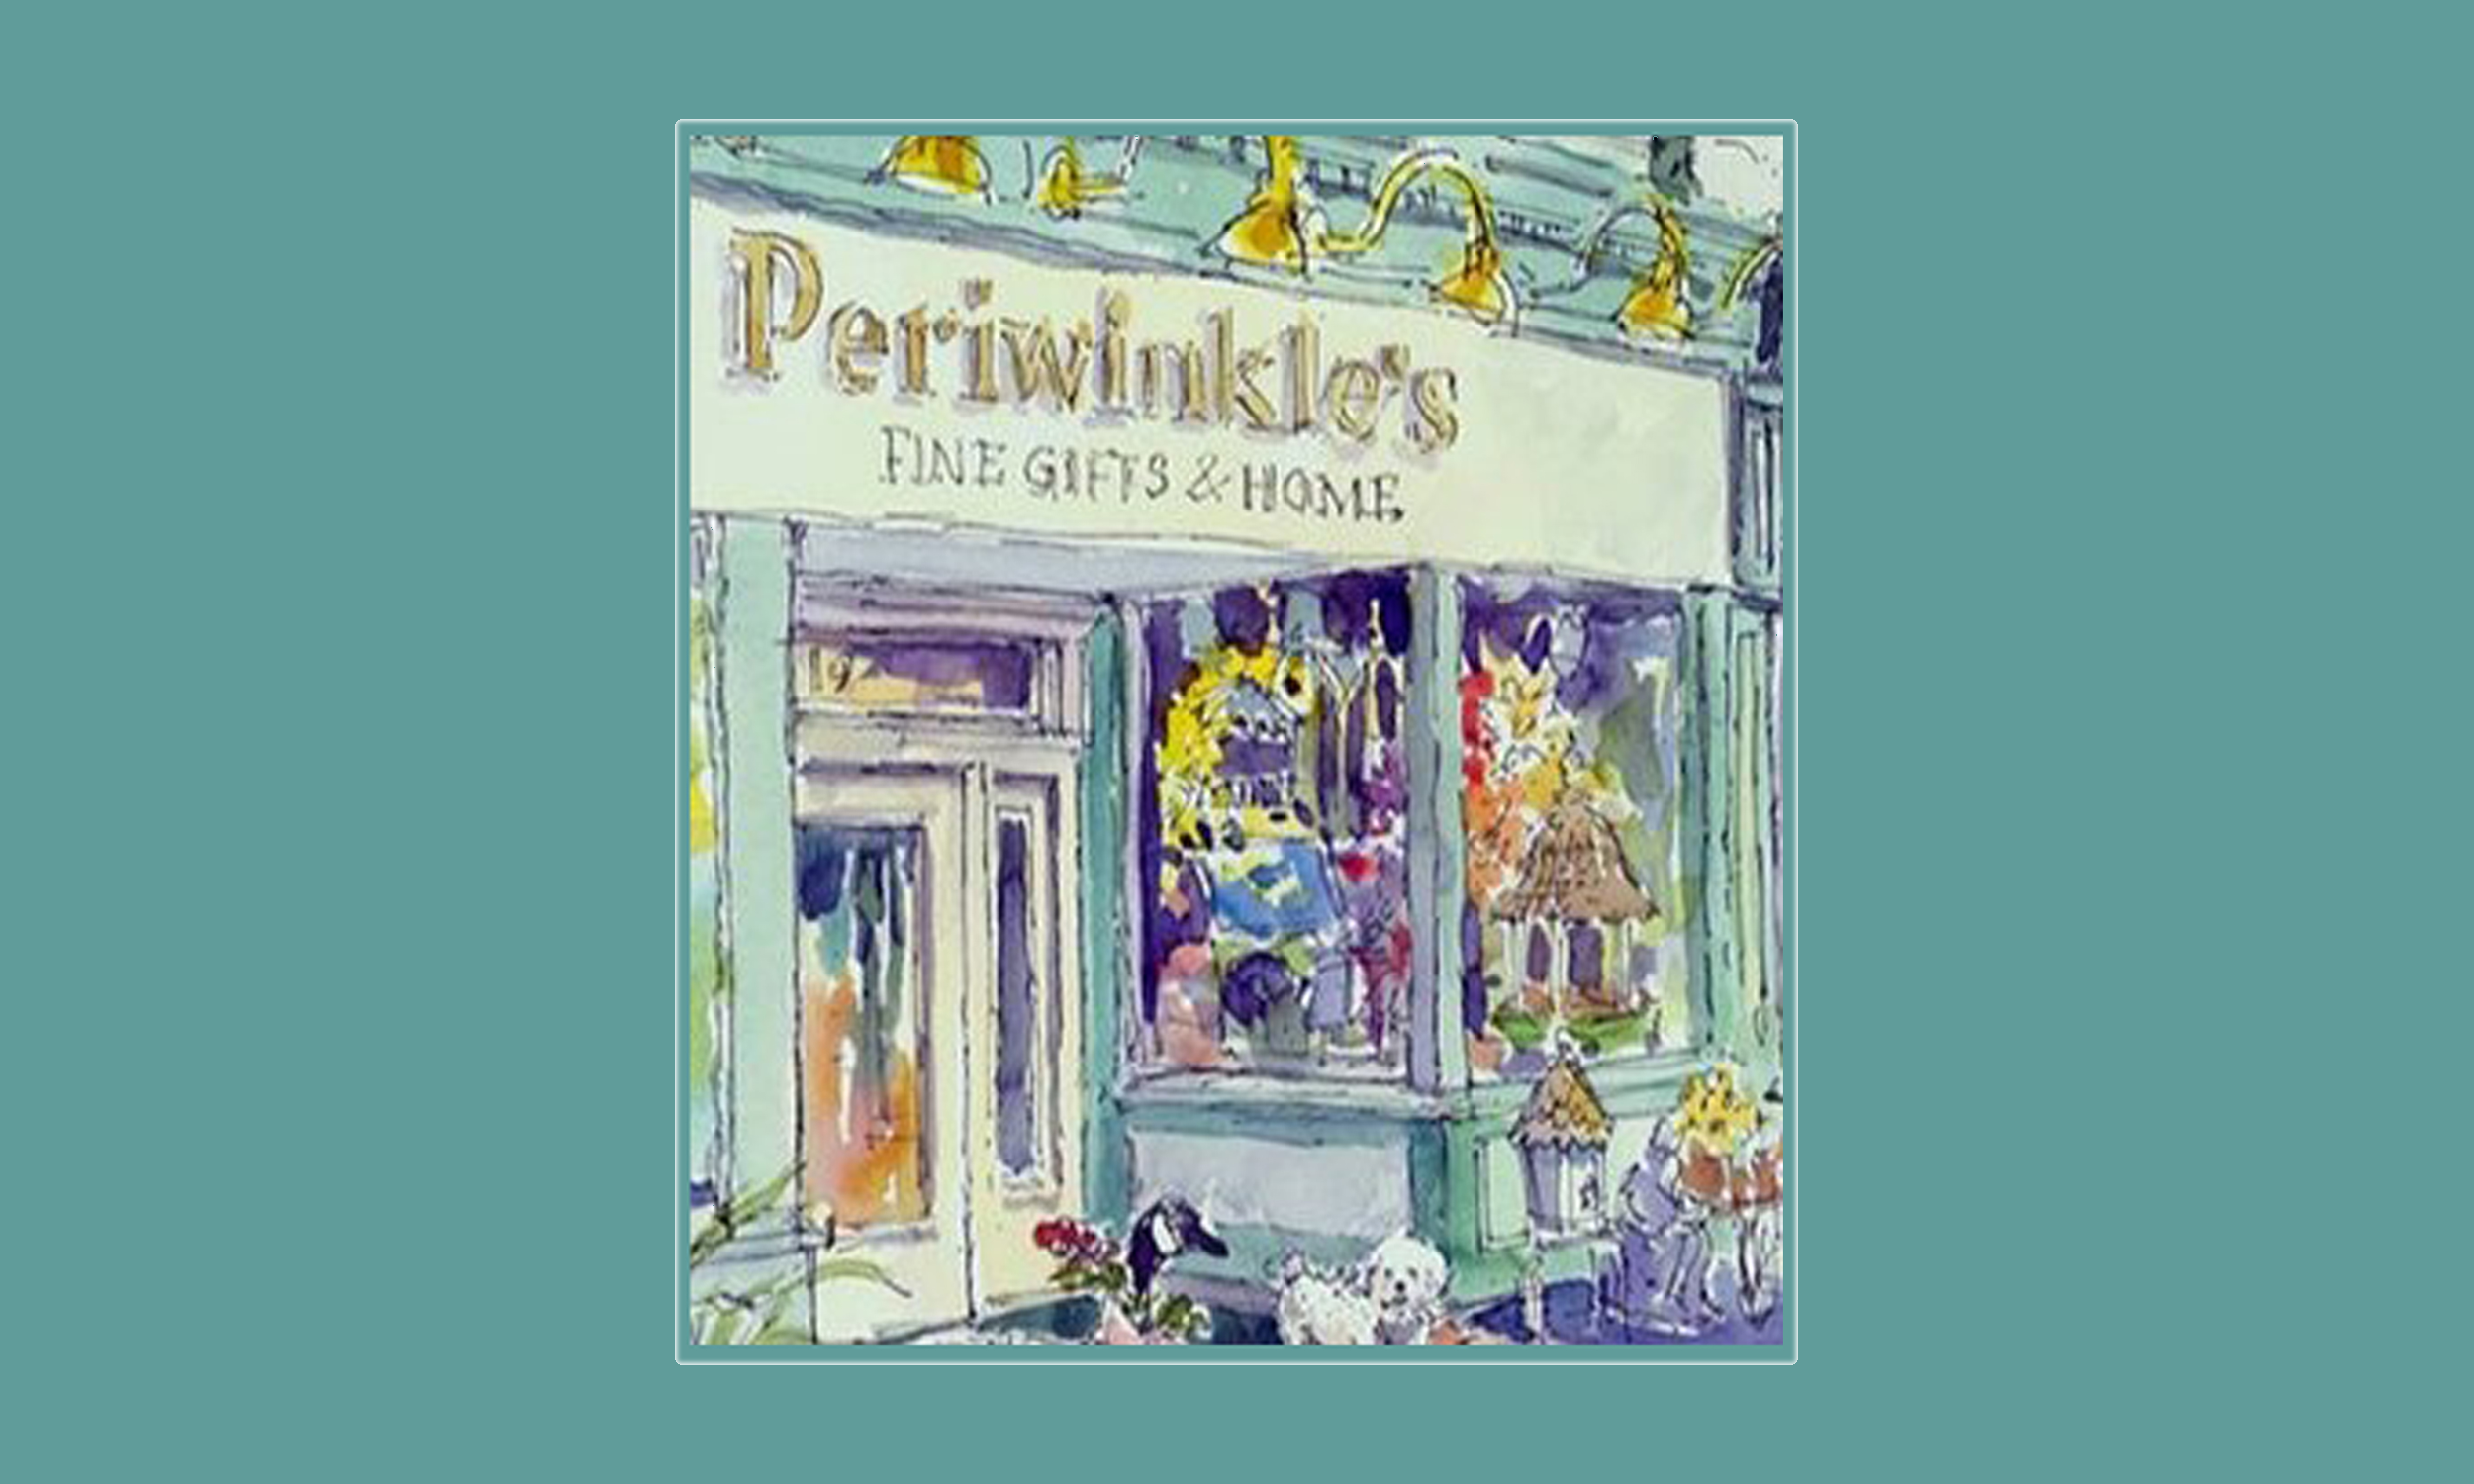 Periwinkle's